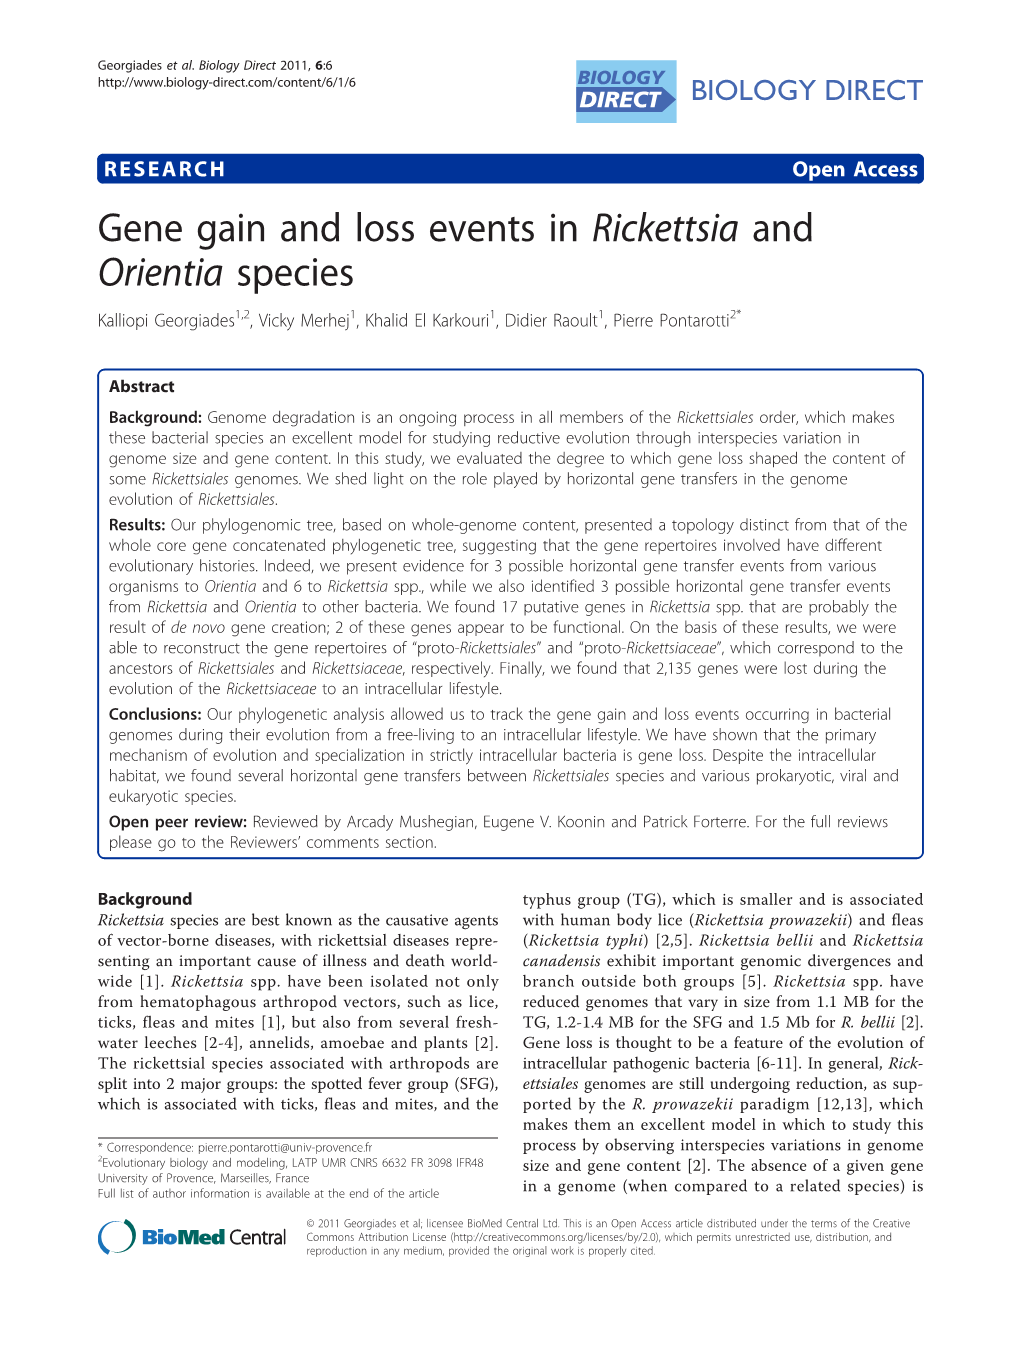 Gene Gain and Loss Events in Rickettsia and Orientia Species Kalliopi Georgiades1,2, Vicky Merhej1, Khalid El Karkouri1, Didier Raoult1, Pierre Pontarotti2*